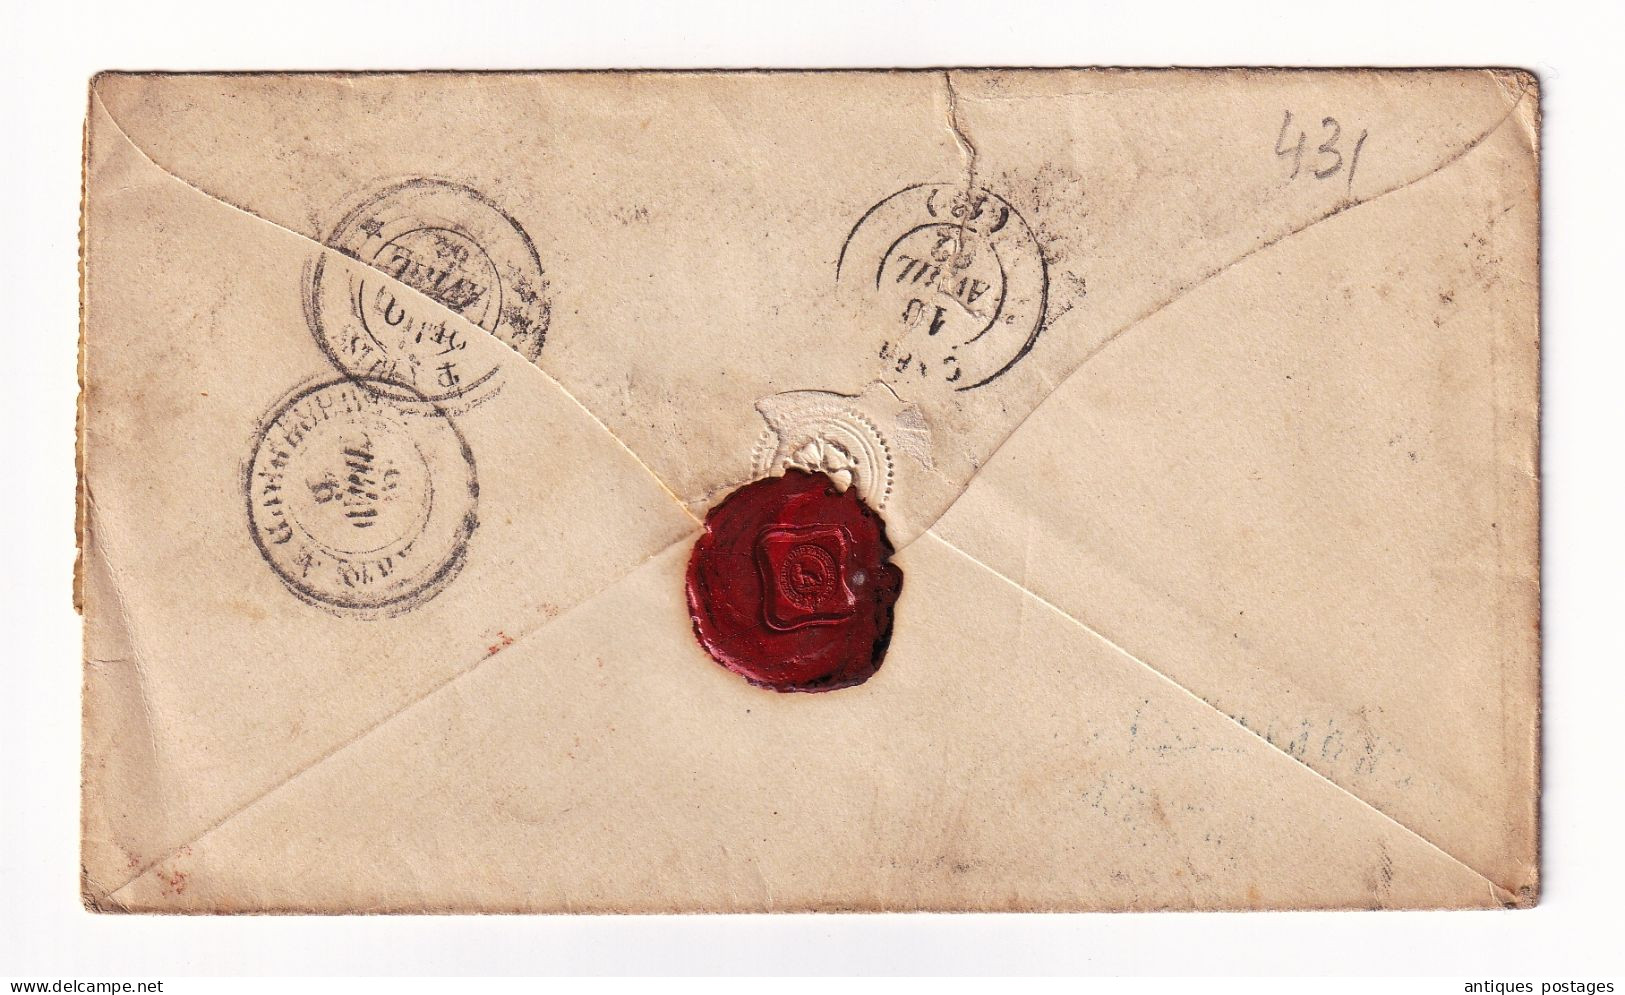 Great Britain 1862 London Bertrand Maire De Caen Calvados England Stamp Queen Victoria - Covers & Documents